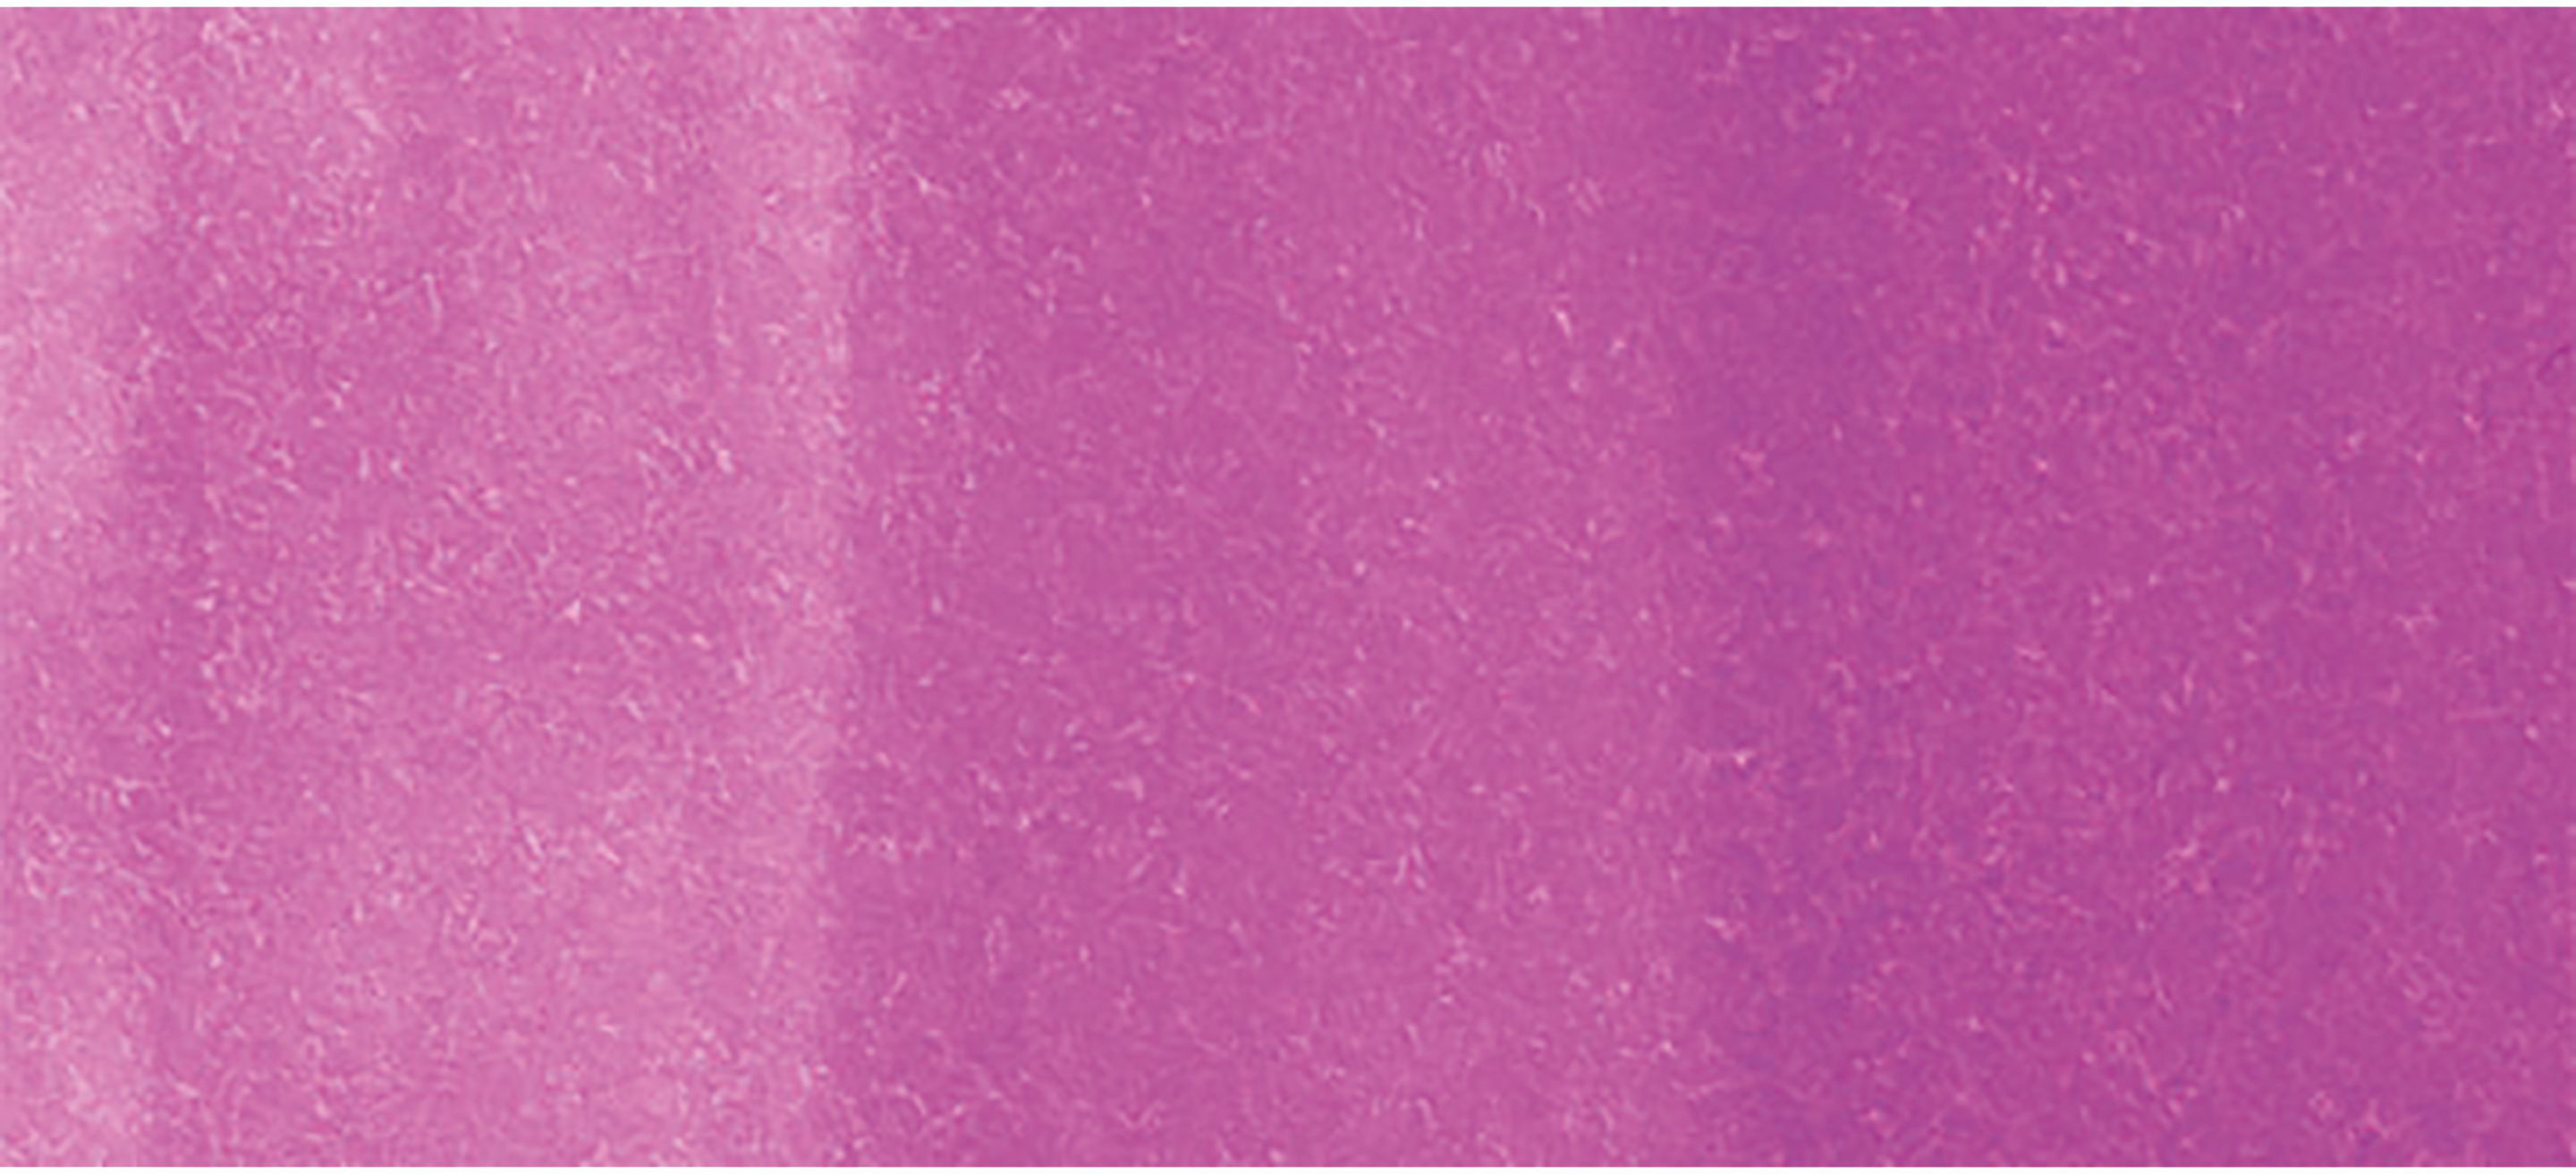 COPIC Marker Sketch 21075138 V04 - Lilac